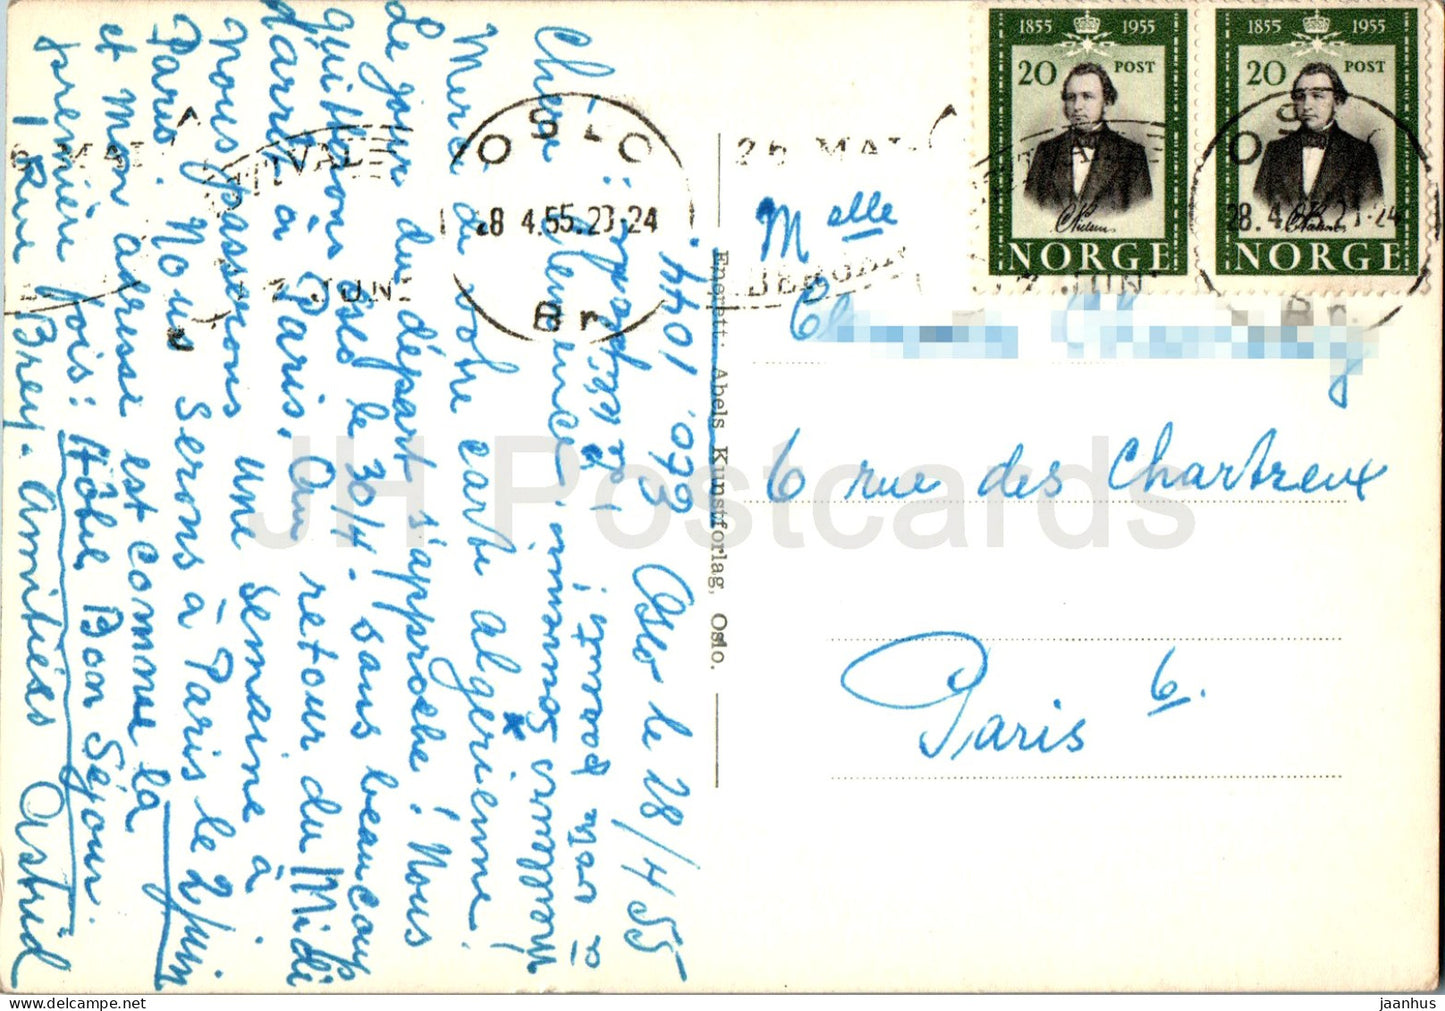 Oslo - Karl Johansgate - Slottet - château - carte postale ancienne - 1955 - Norvège - utilisé 